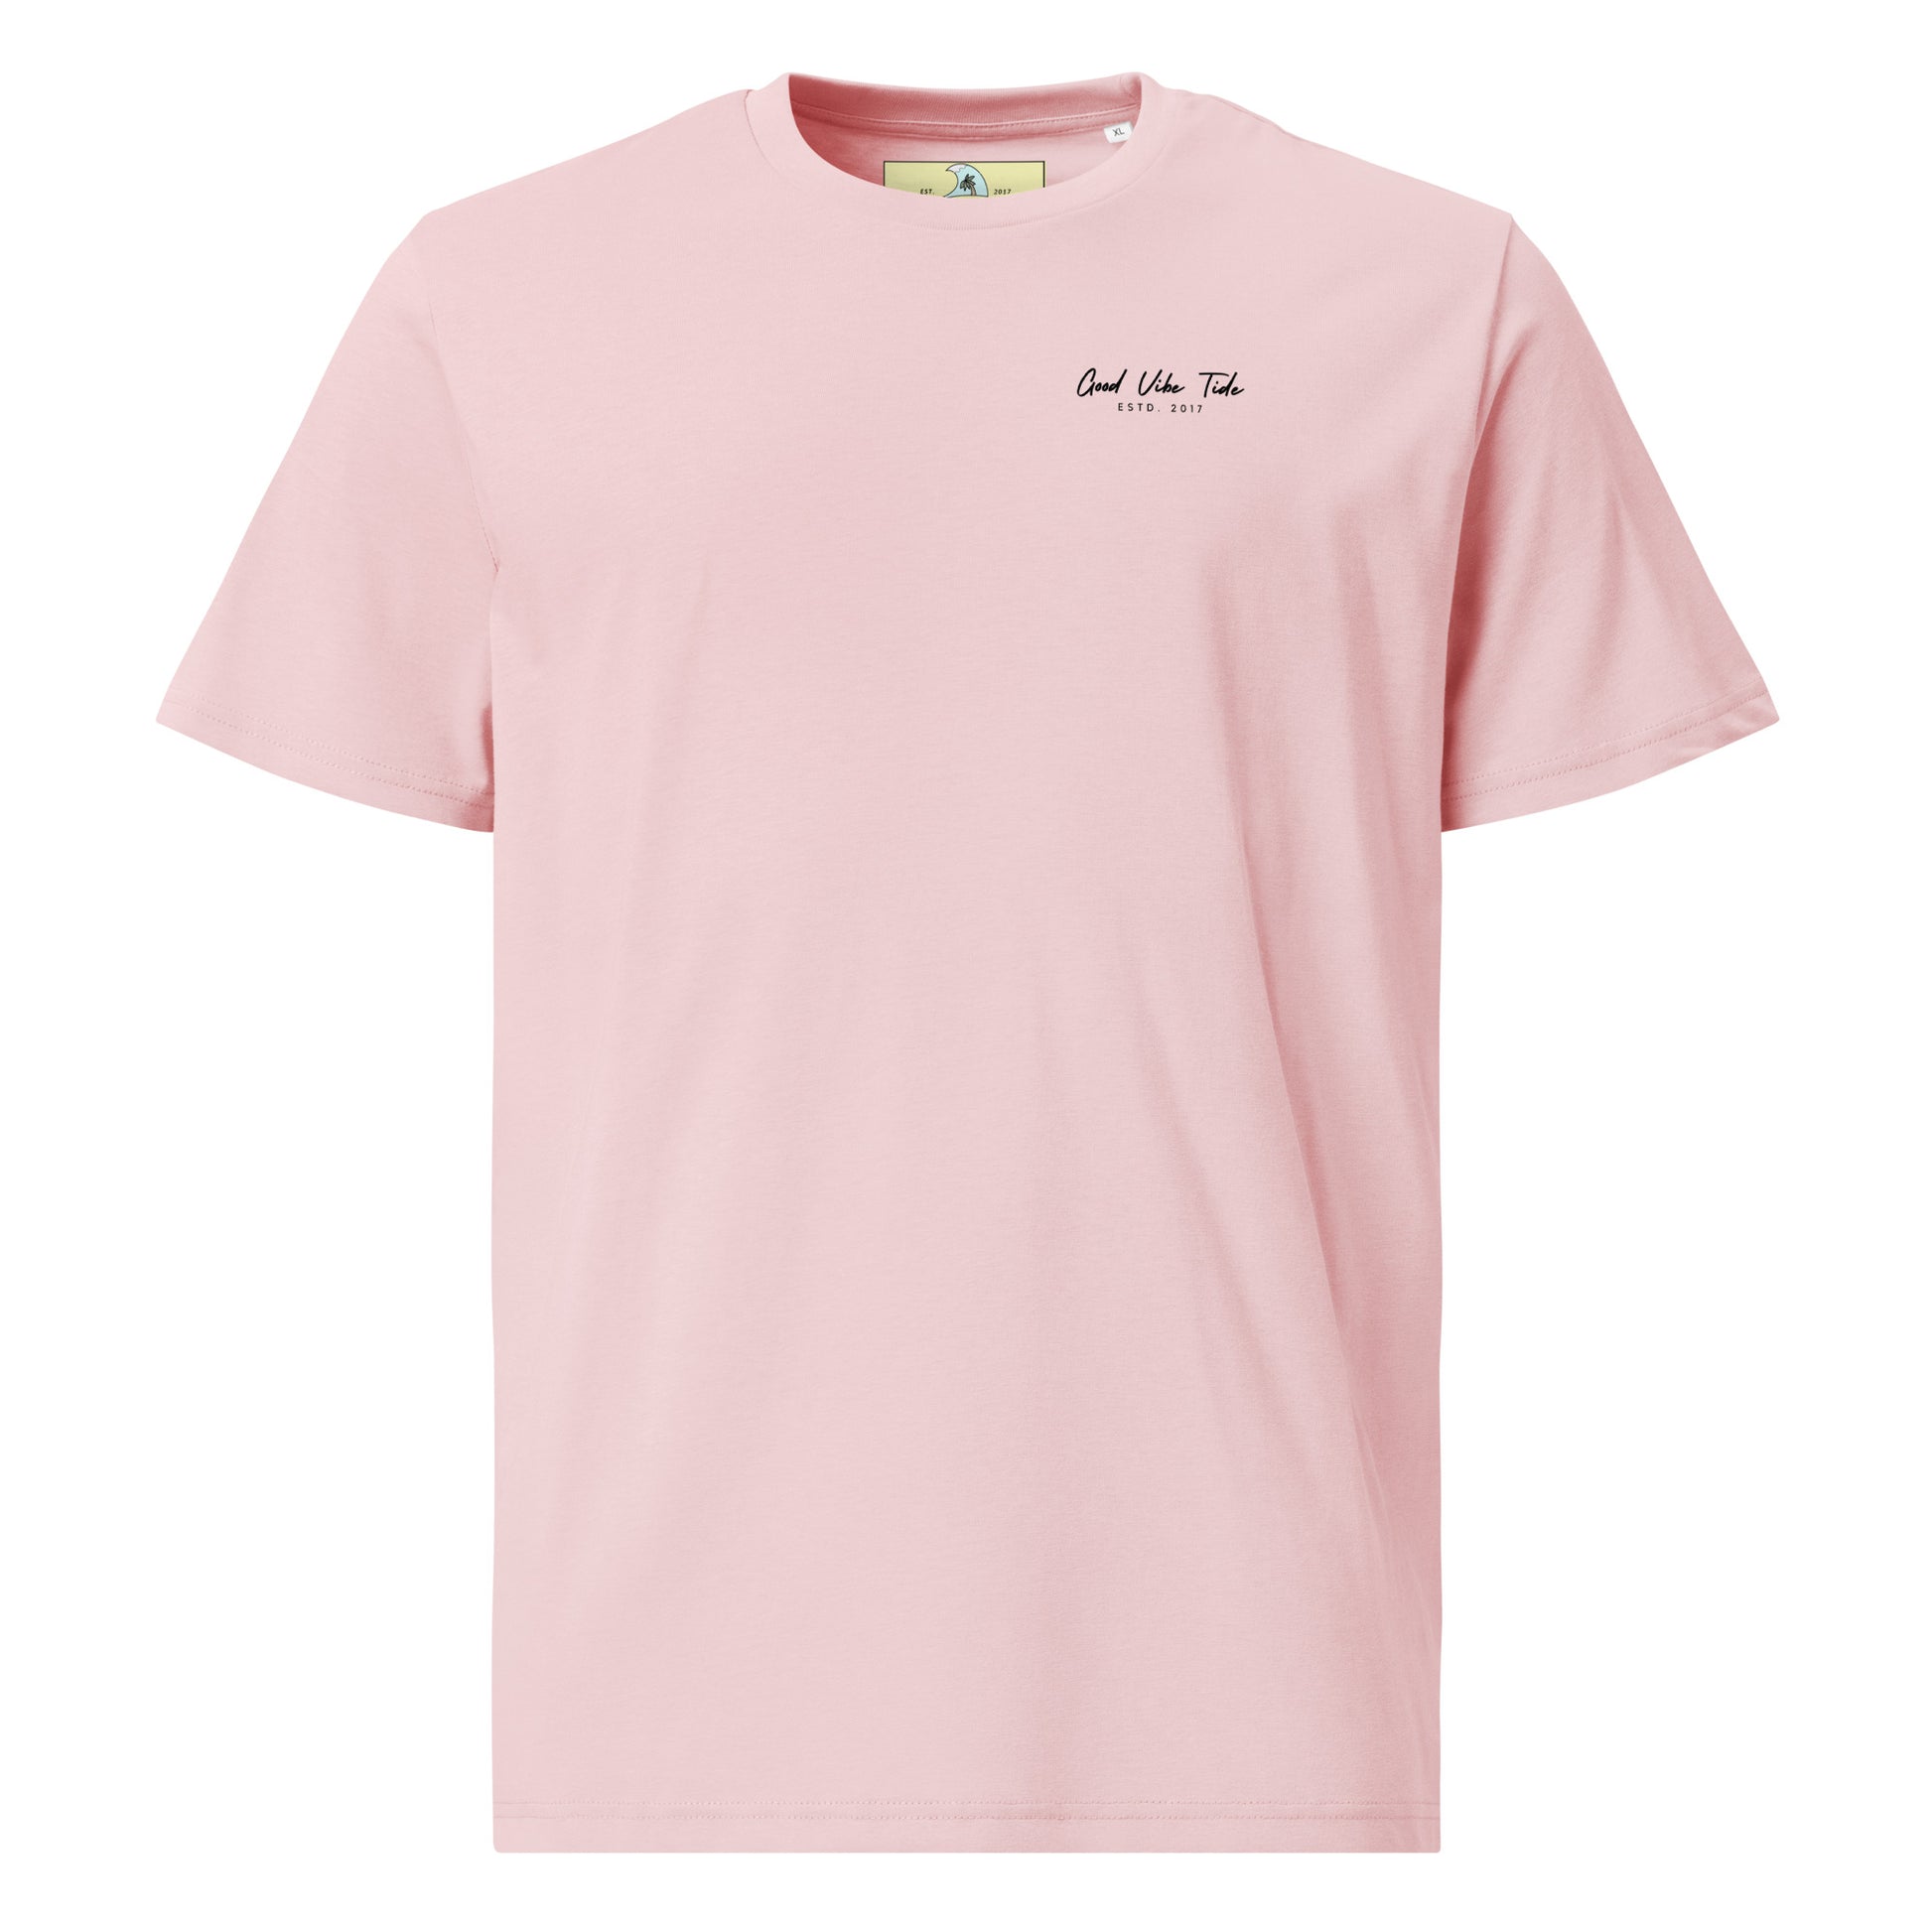 Chase Sunsets, Not Stress Organic Cotton T-Shirt | Tropical Seas Clothing - Tropical Seas Clothing 